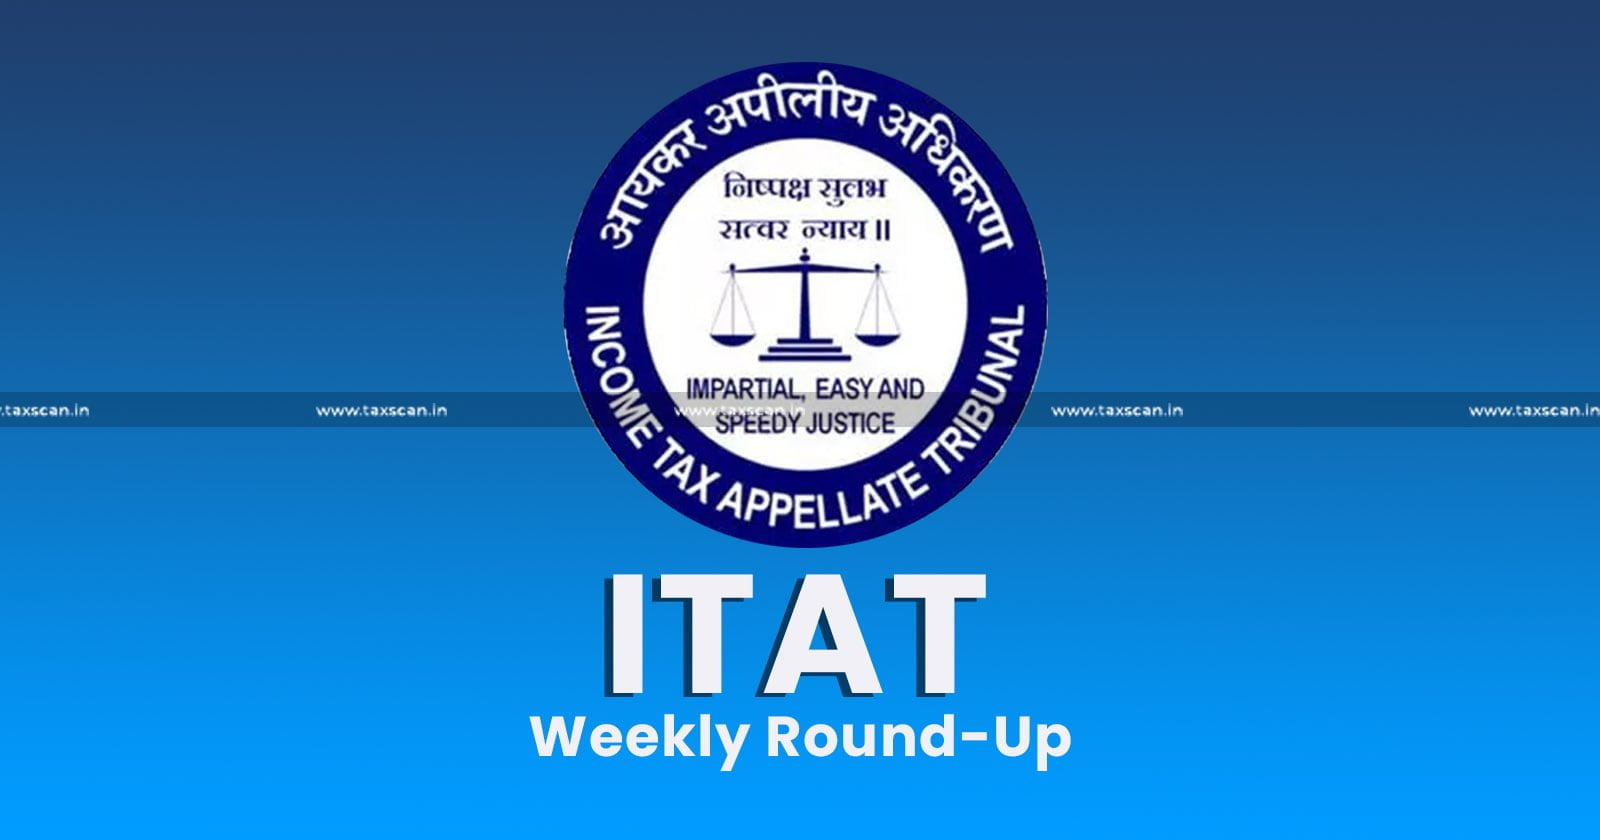 ITAT Weekly Round Up - ITAT - Weekly Round Up - income tax act - income tax news - taxscan